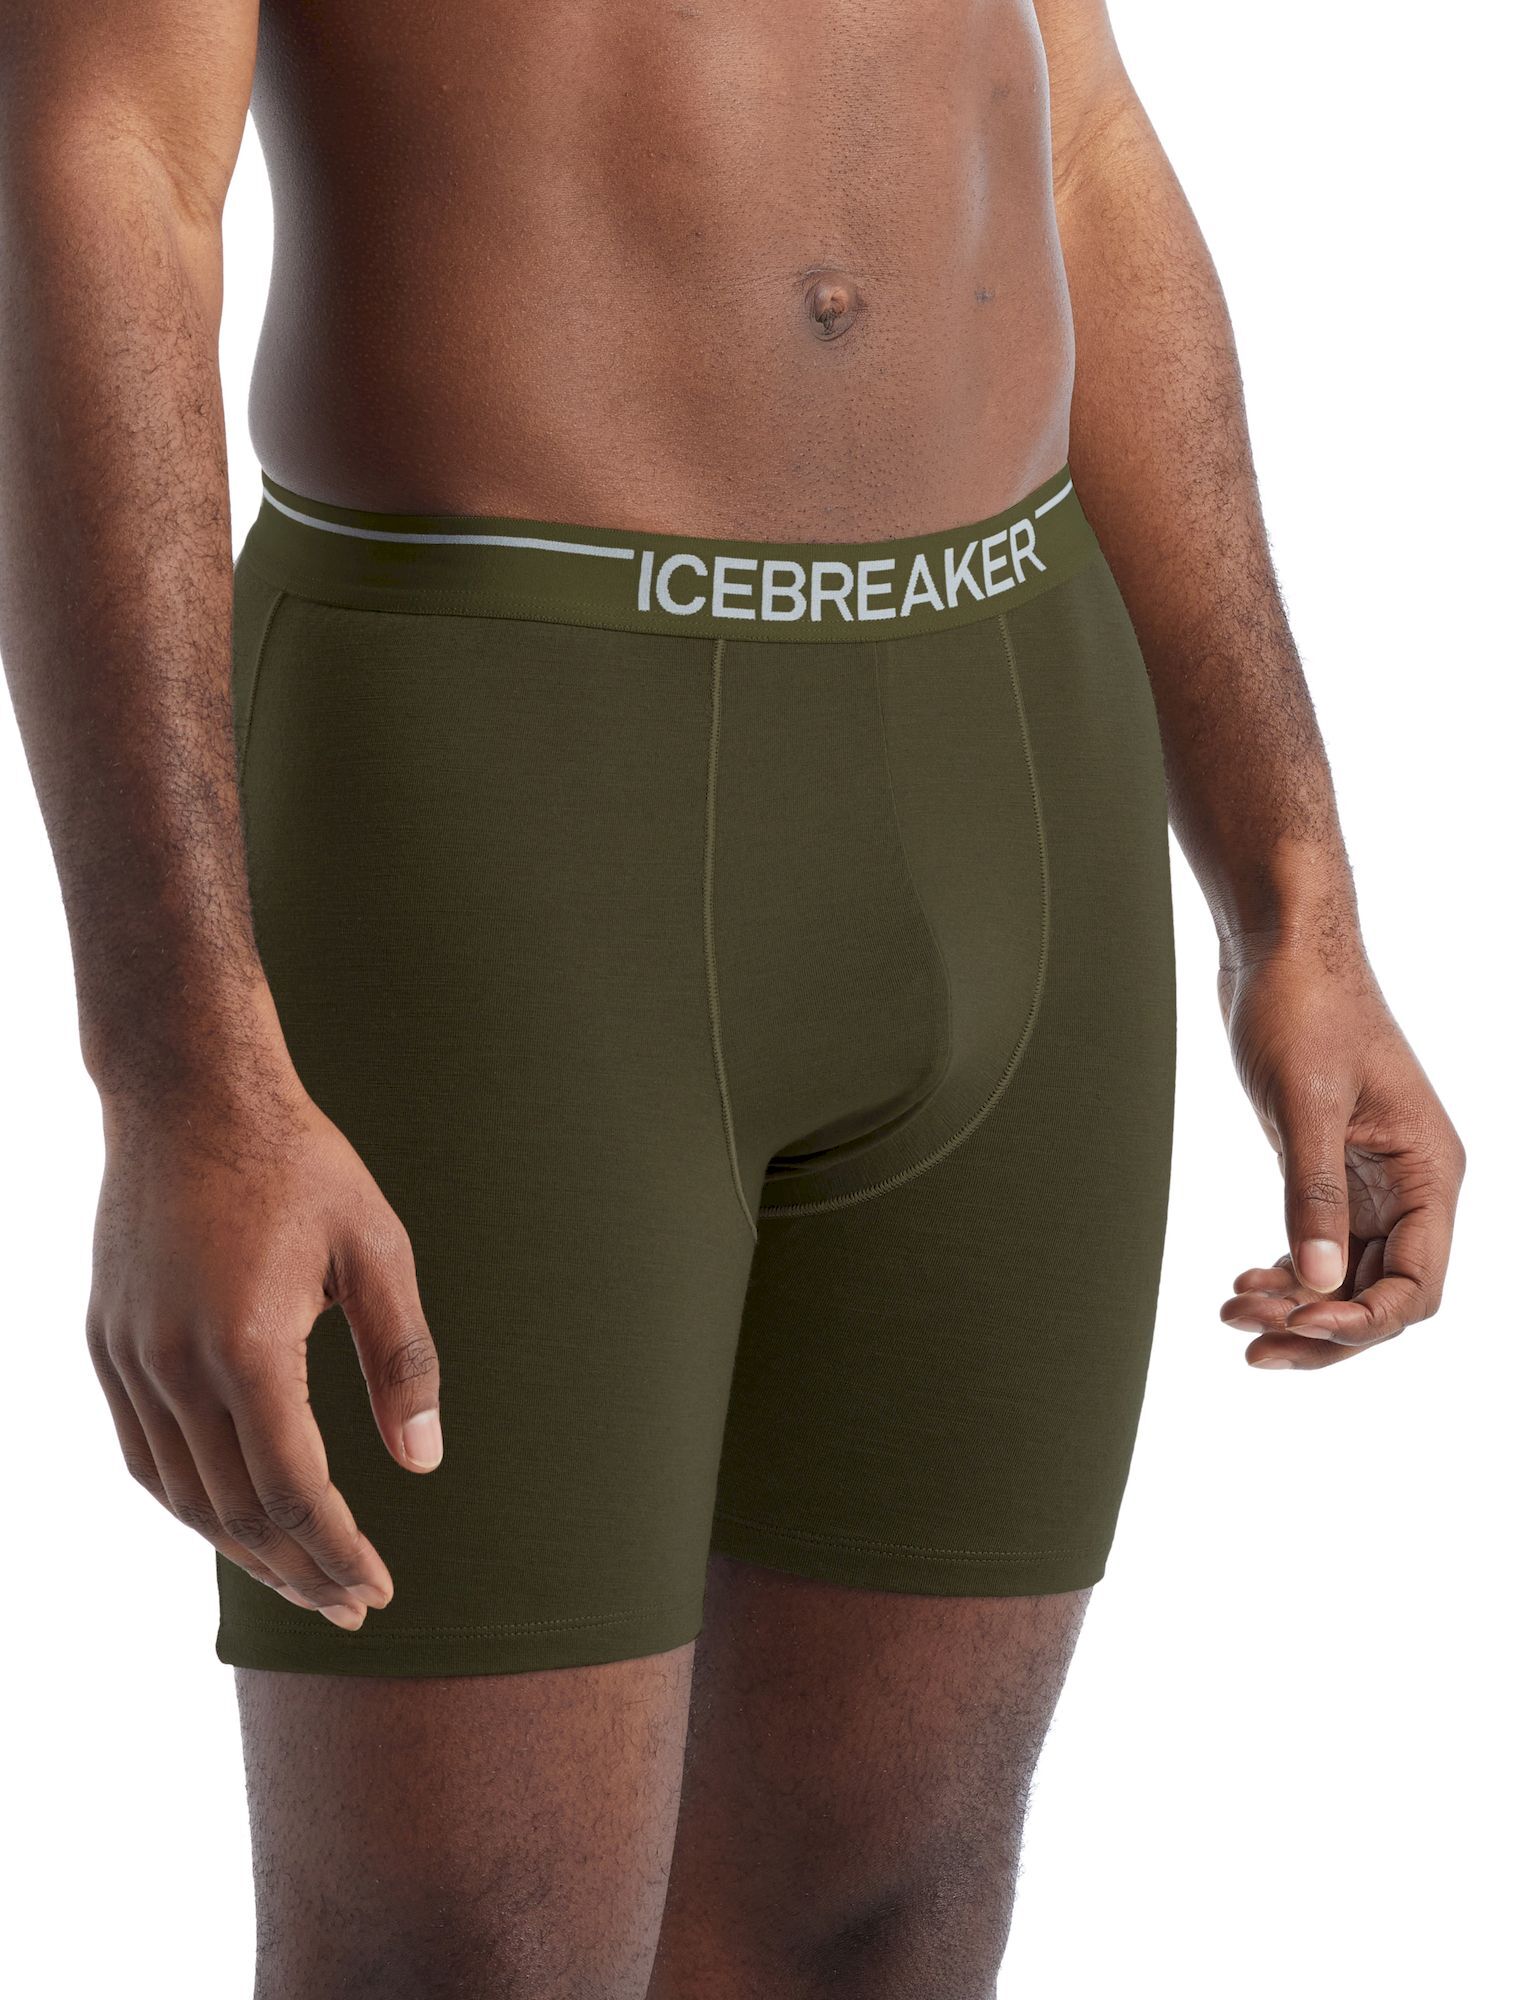 Icebreaker Mens Anatomica Long Boxers - Underwear - Men's